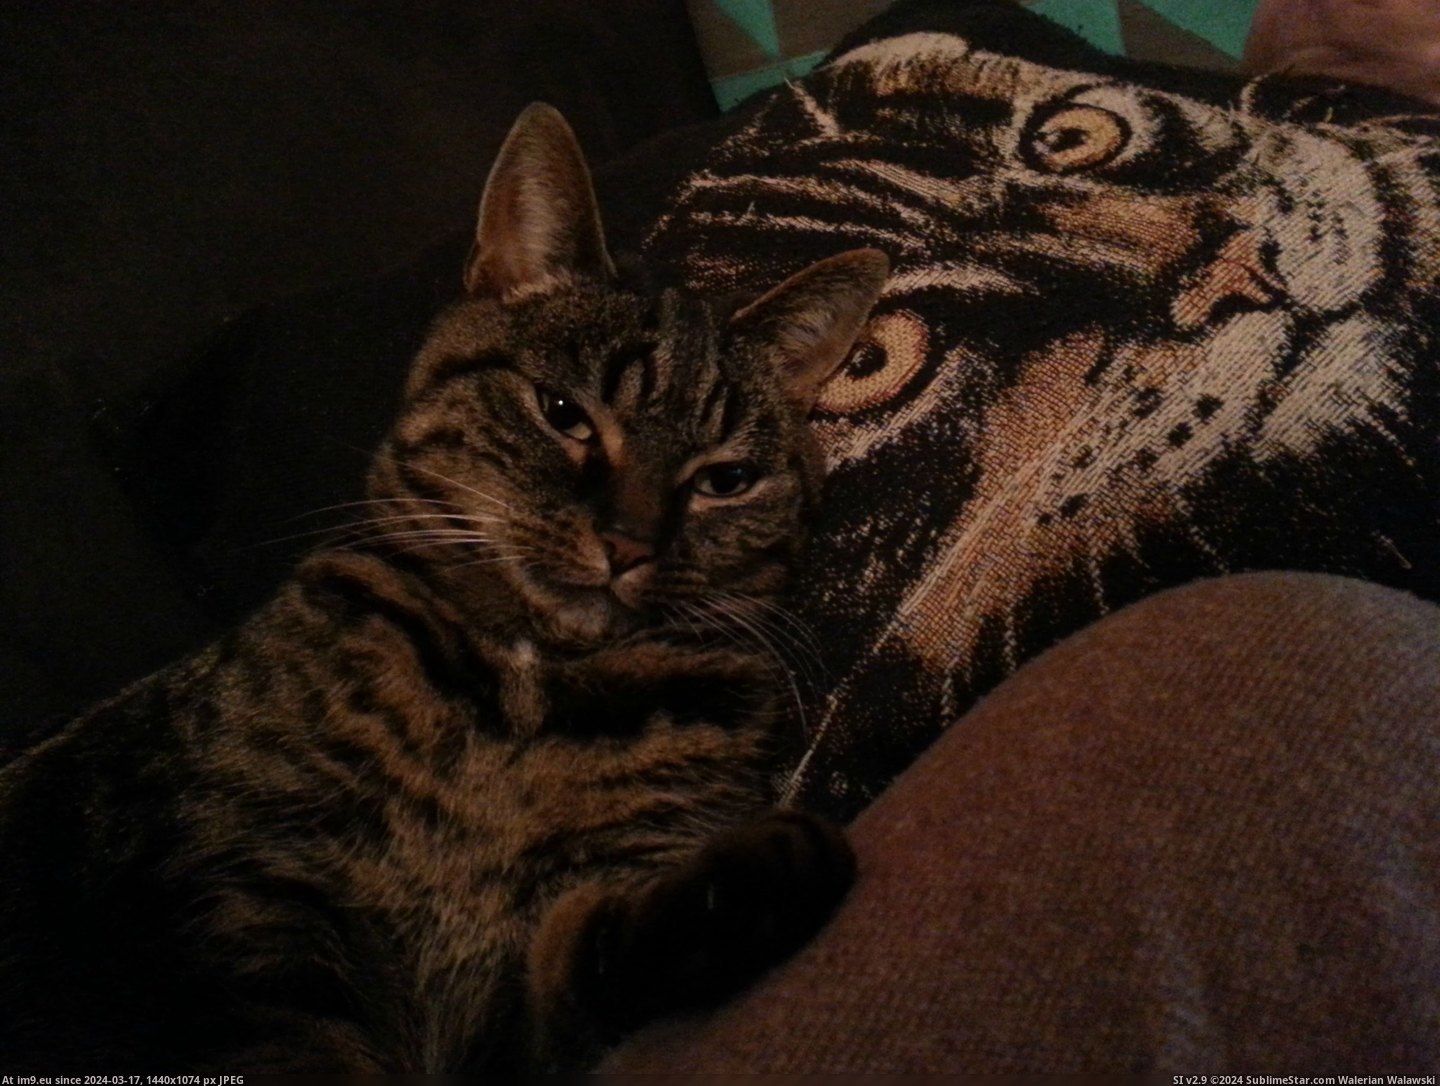 #Cats #Favorite #Pillow #Sleeping #Charlie [Cats] Charlie sleeping against her favorite pillow Pic. (Obraz z album My r/CATS favs))